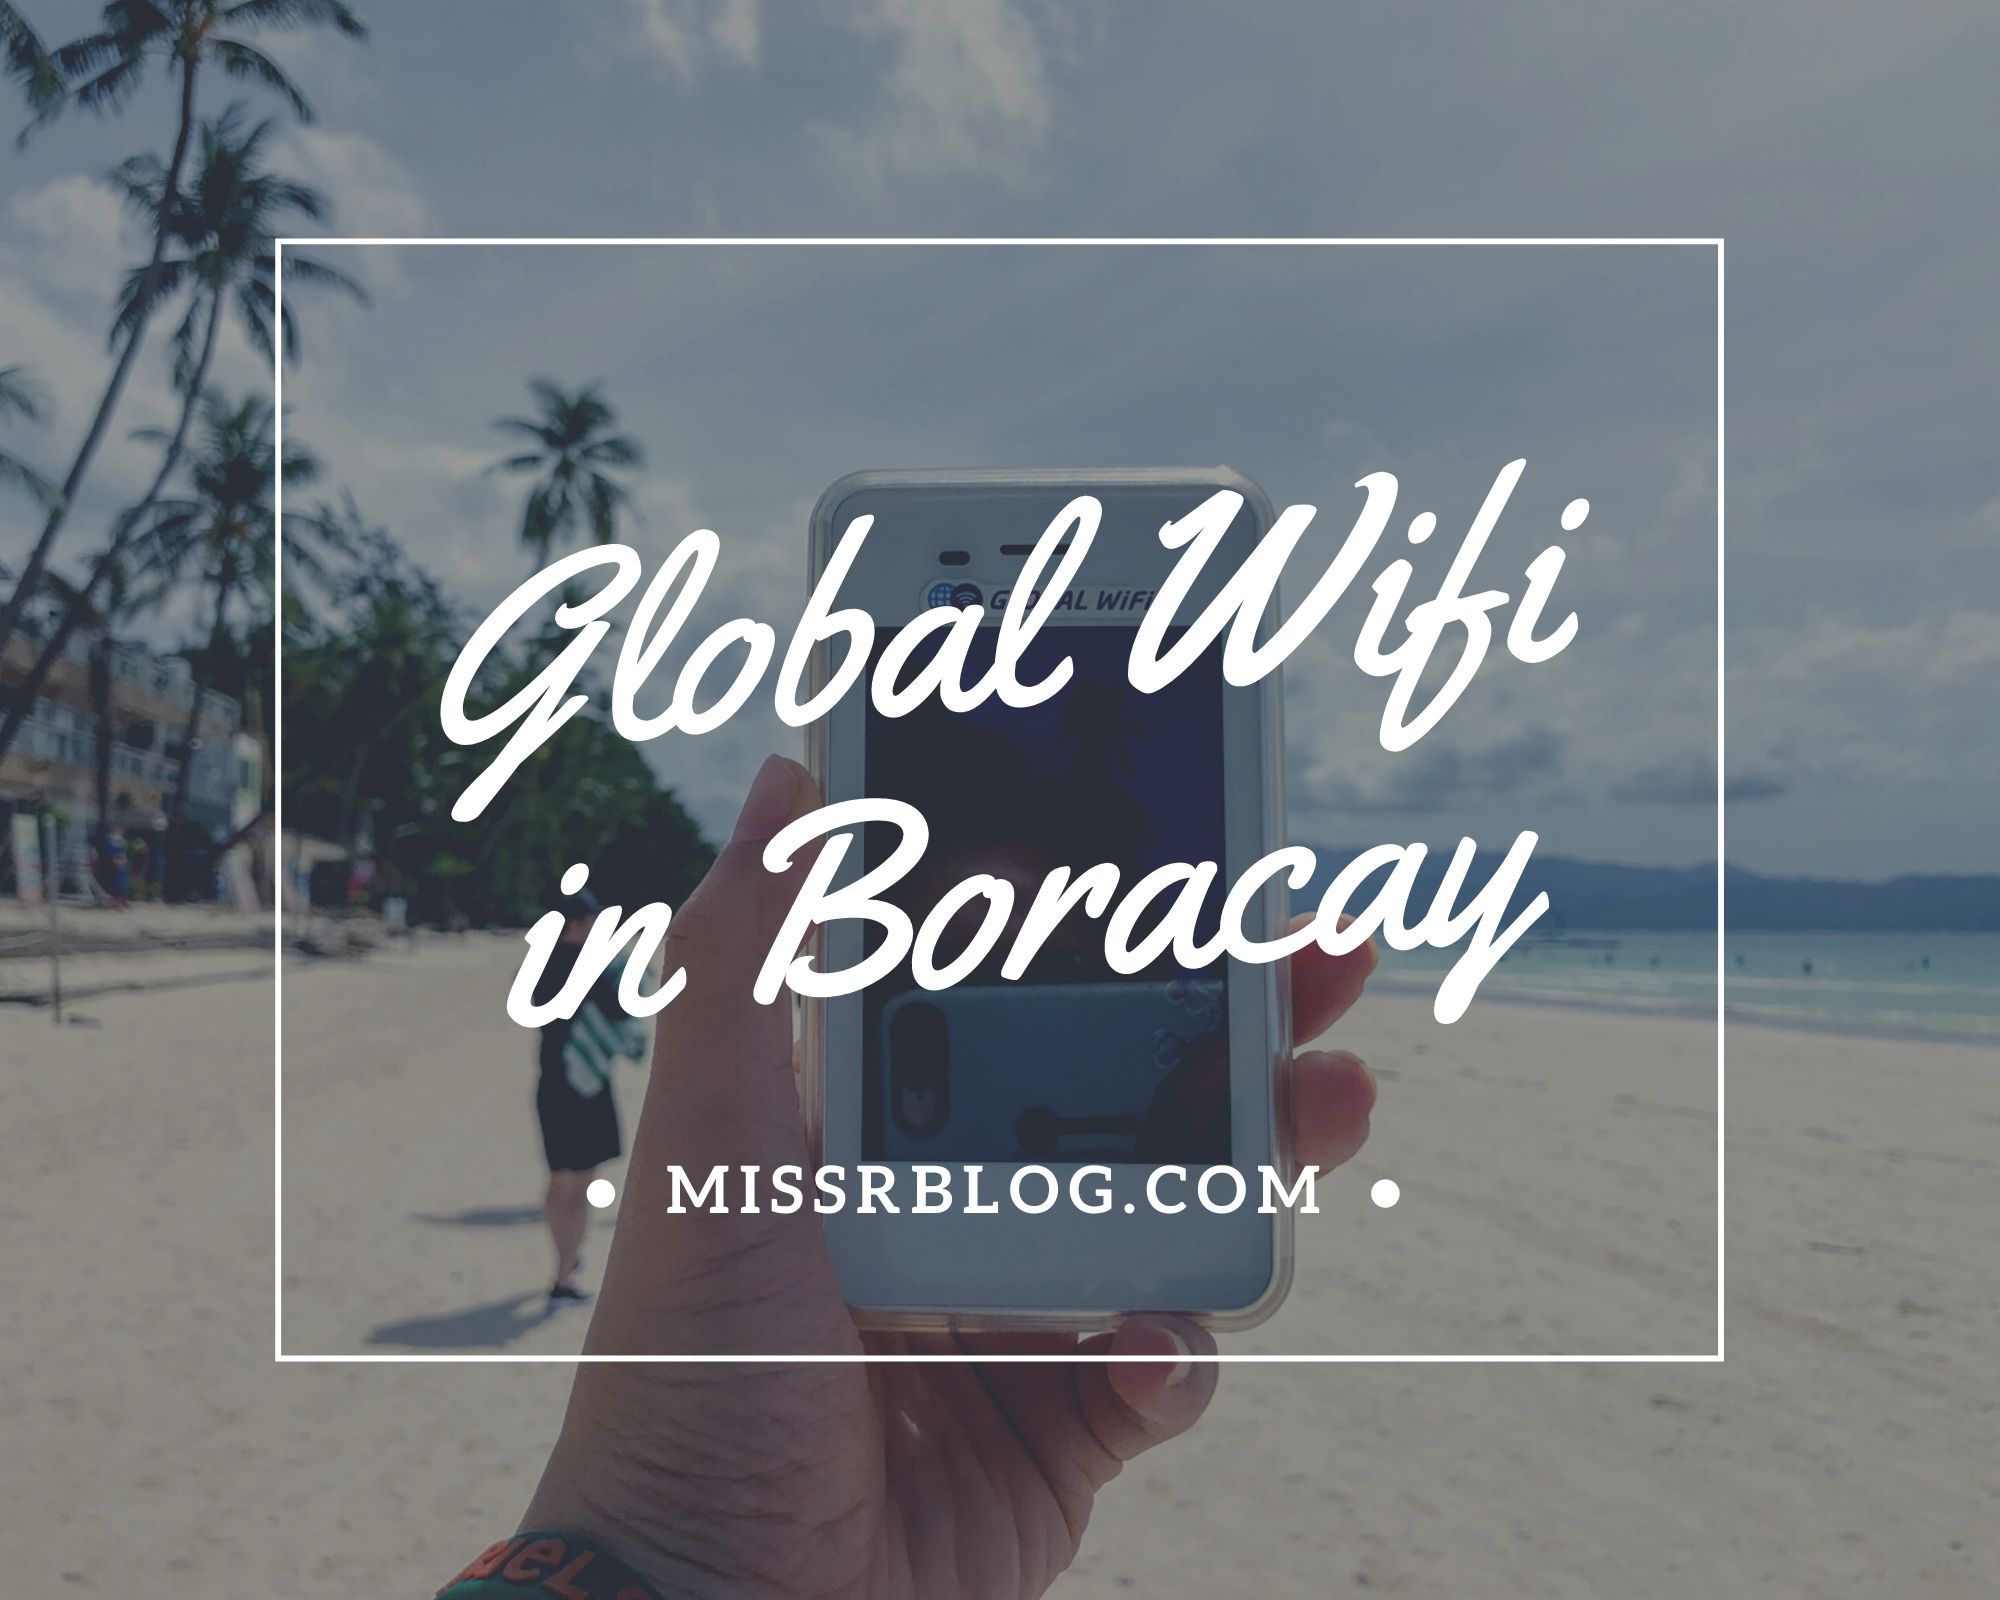 “globalwifi,長灘島上網,長灘島sim卡,長灘島wifi推薦,長灘島訊號,globalwifi優惠,globalwifi上網”